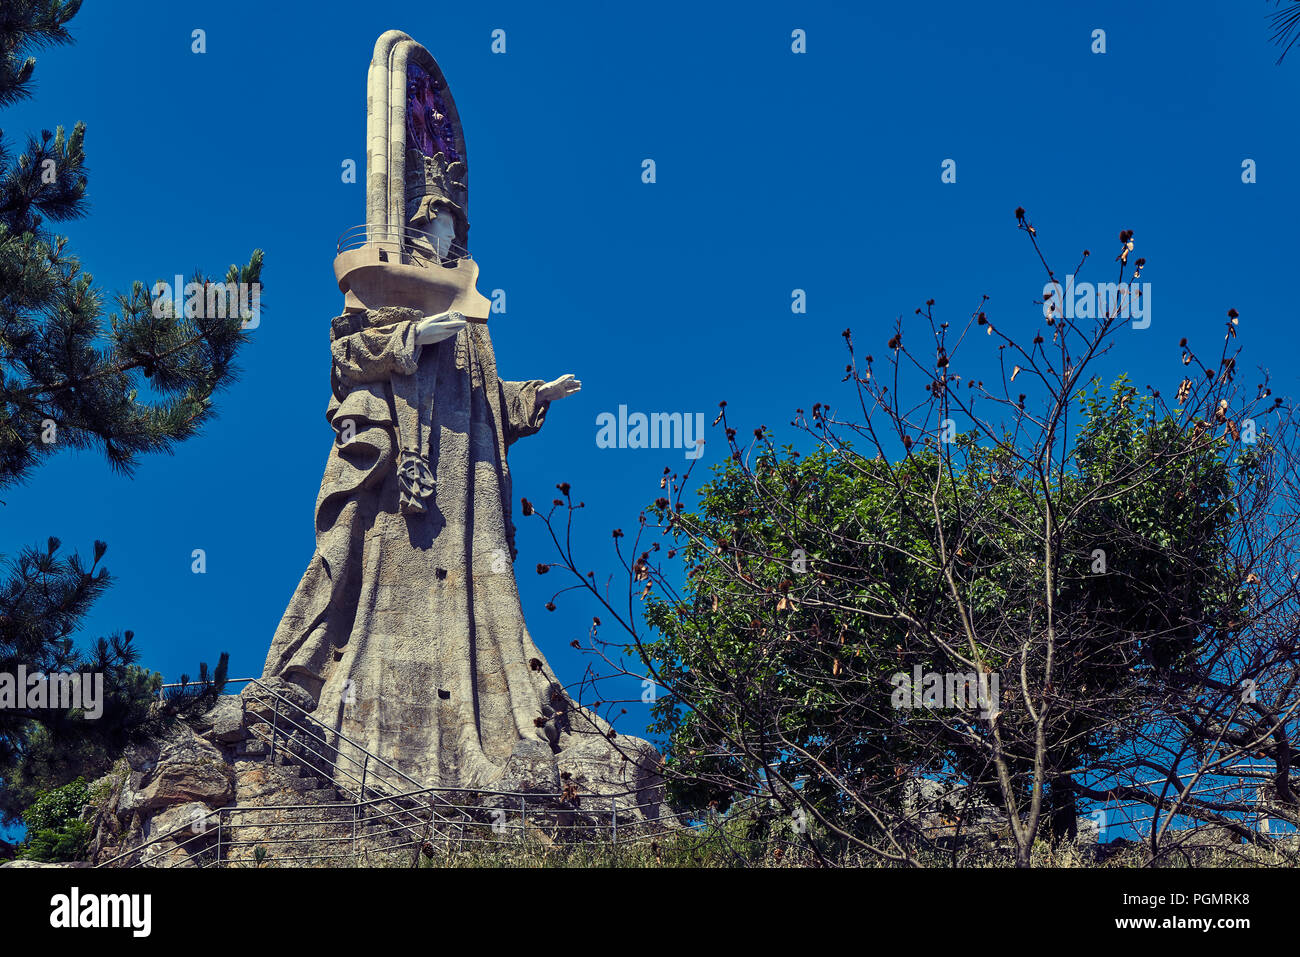 Monument of the Virgin of the Rock on Mount Sanson, Baiona - Bayonne - Pontevedra, Galicia, Spain, Europe Stock Photo